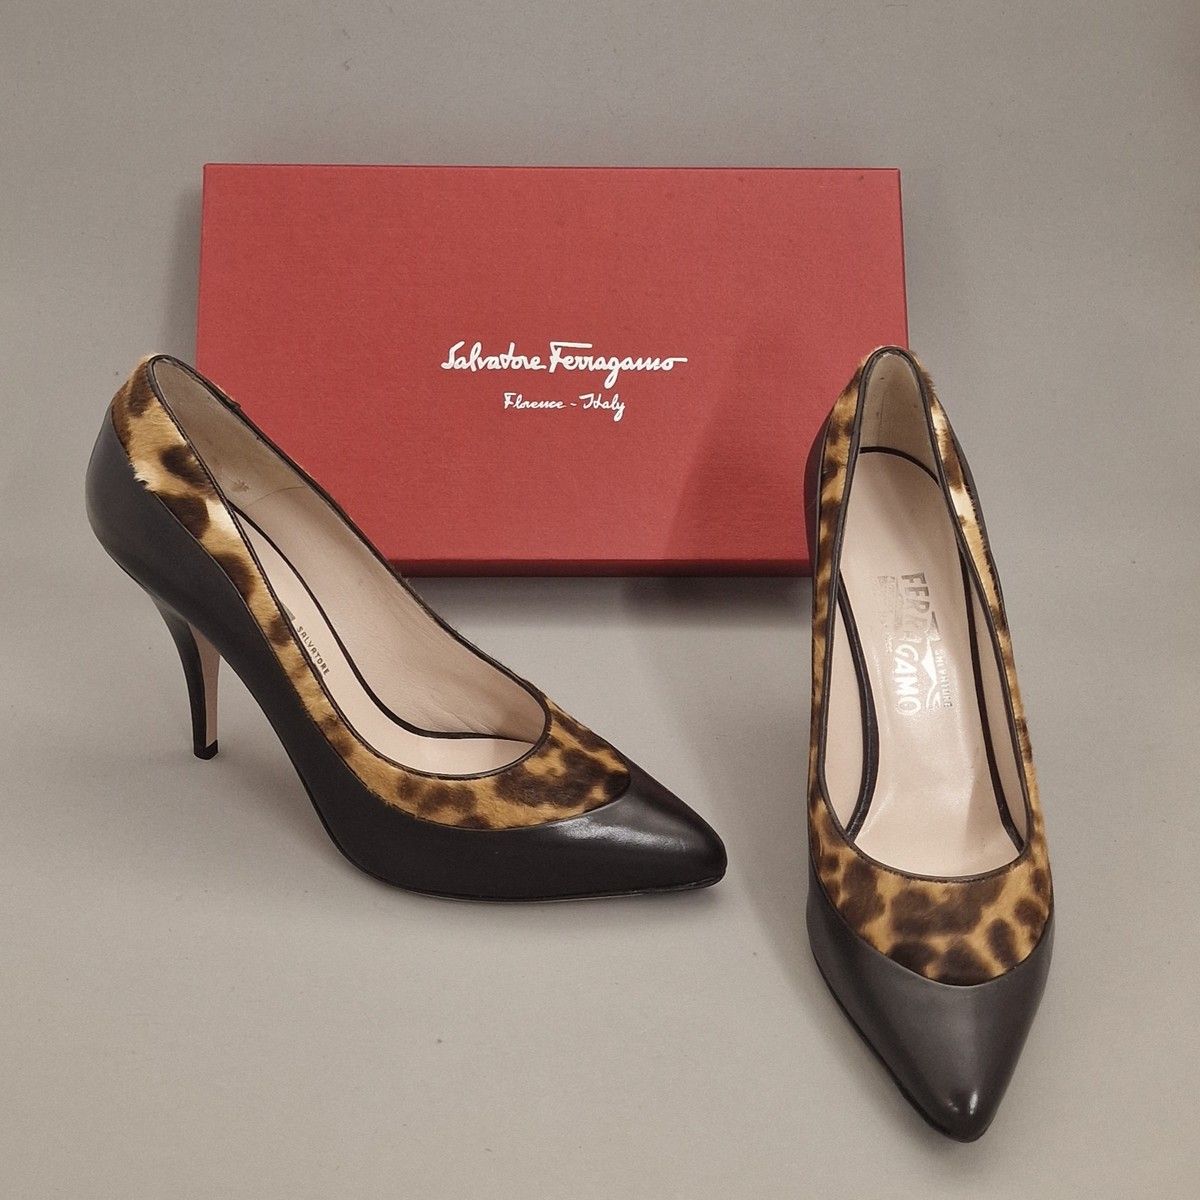 Null Salvatore FERRAGAMO MODEL "FOSCA" - 一双黑色皮毛豹纹女式高跟鞋 
T.9 
鞋跟高度 10 厘米
(完好无损，原装&hellip;